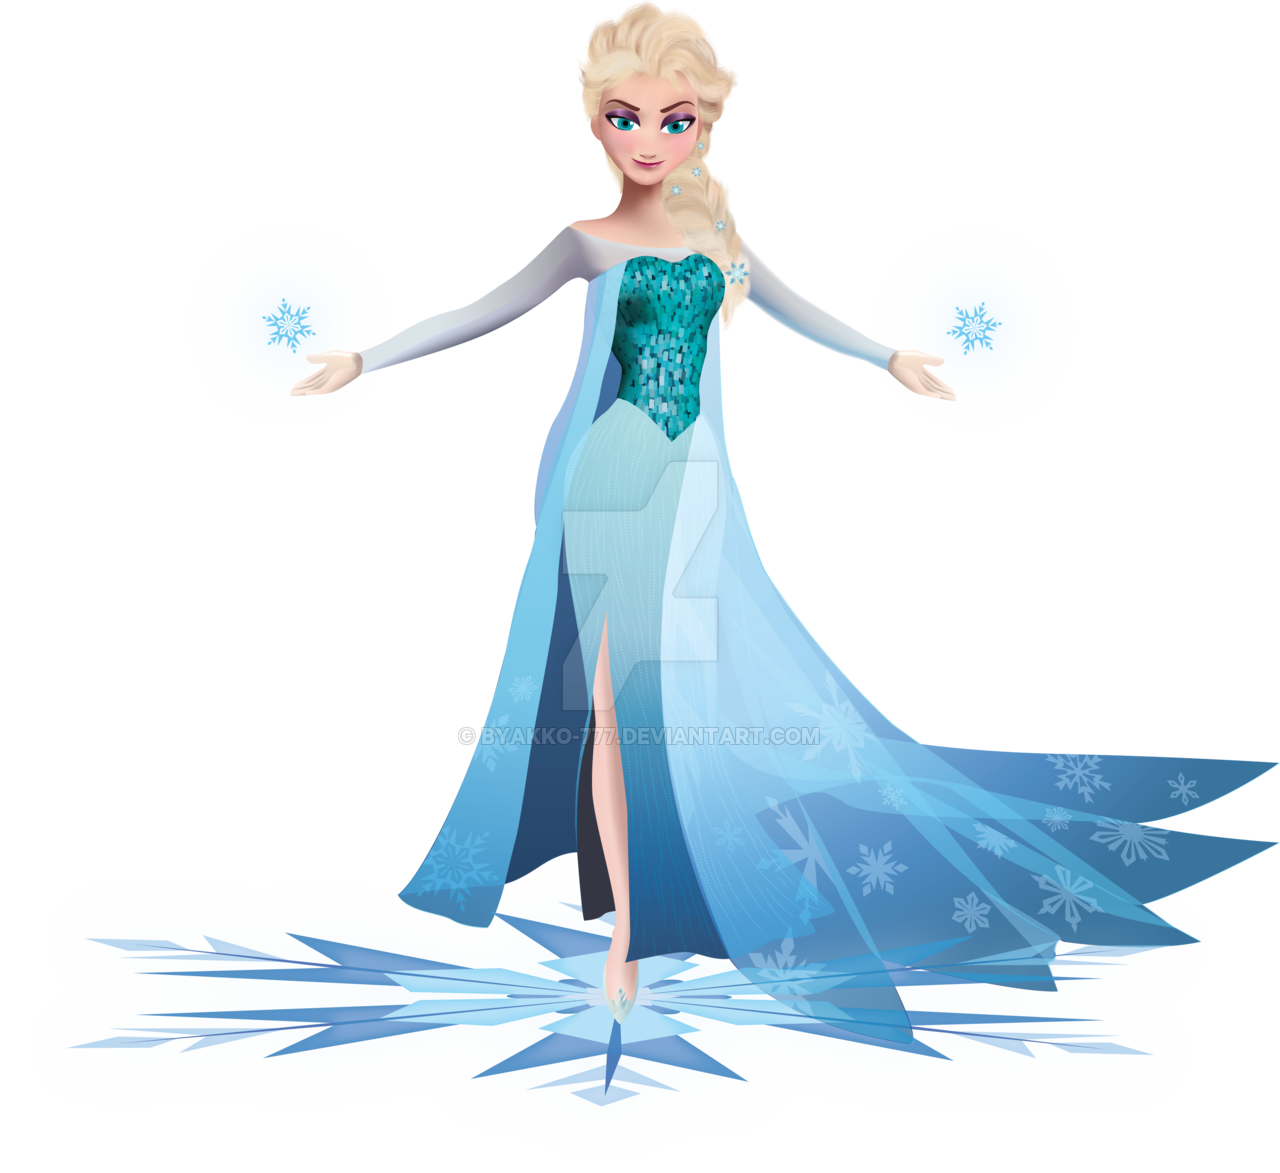 Download Elsa Image HQ PNG Image | FreePNGImg